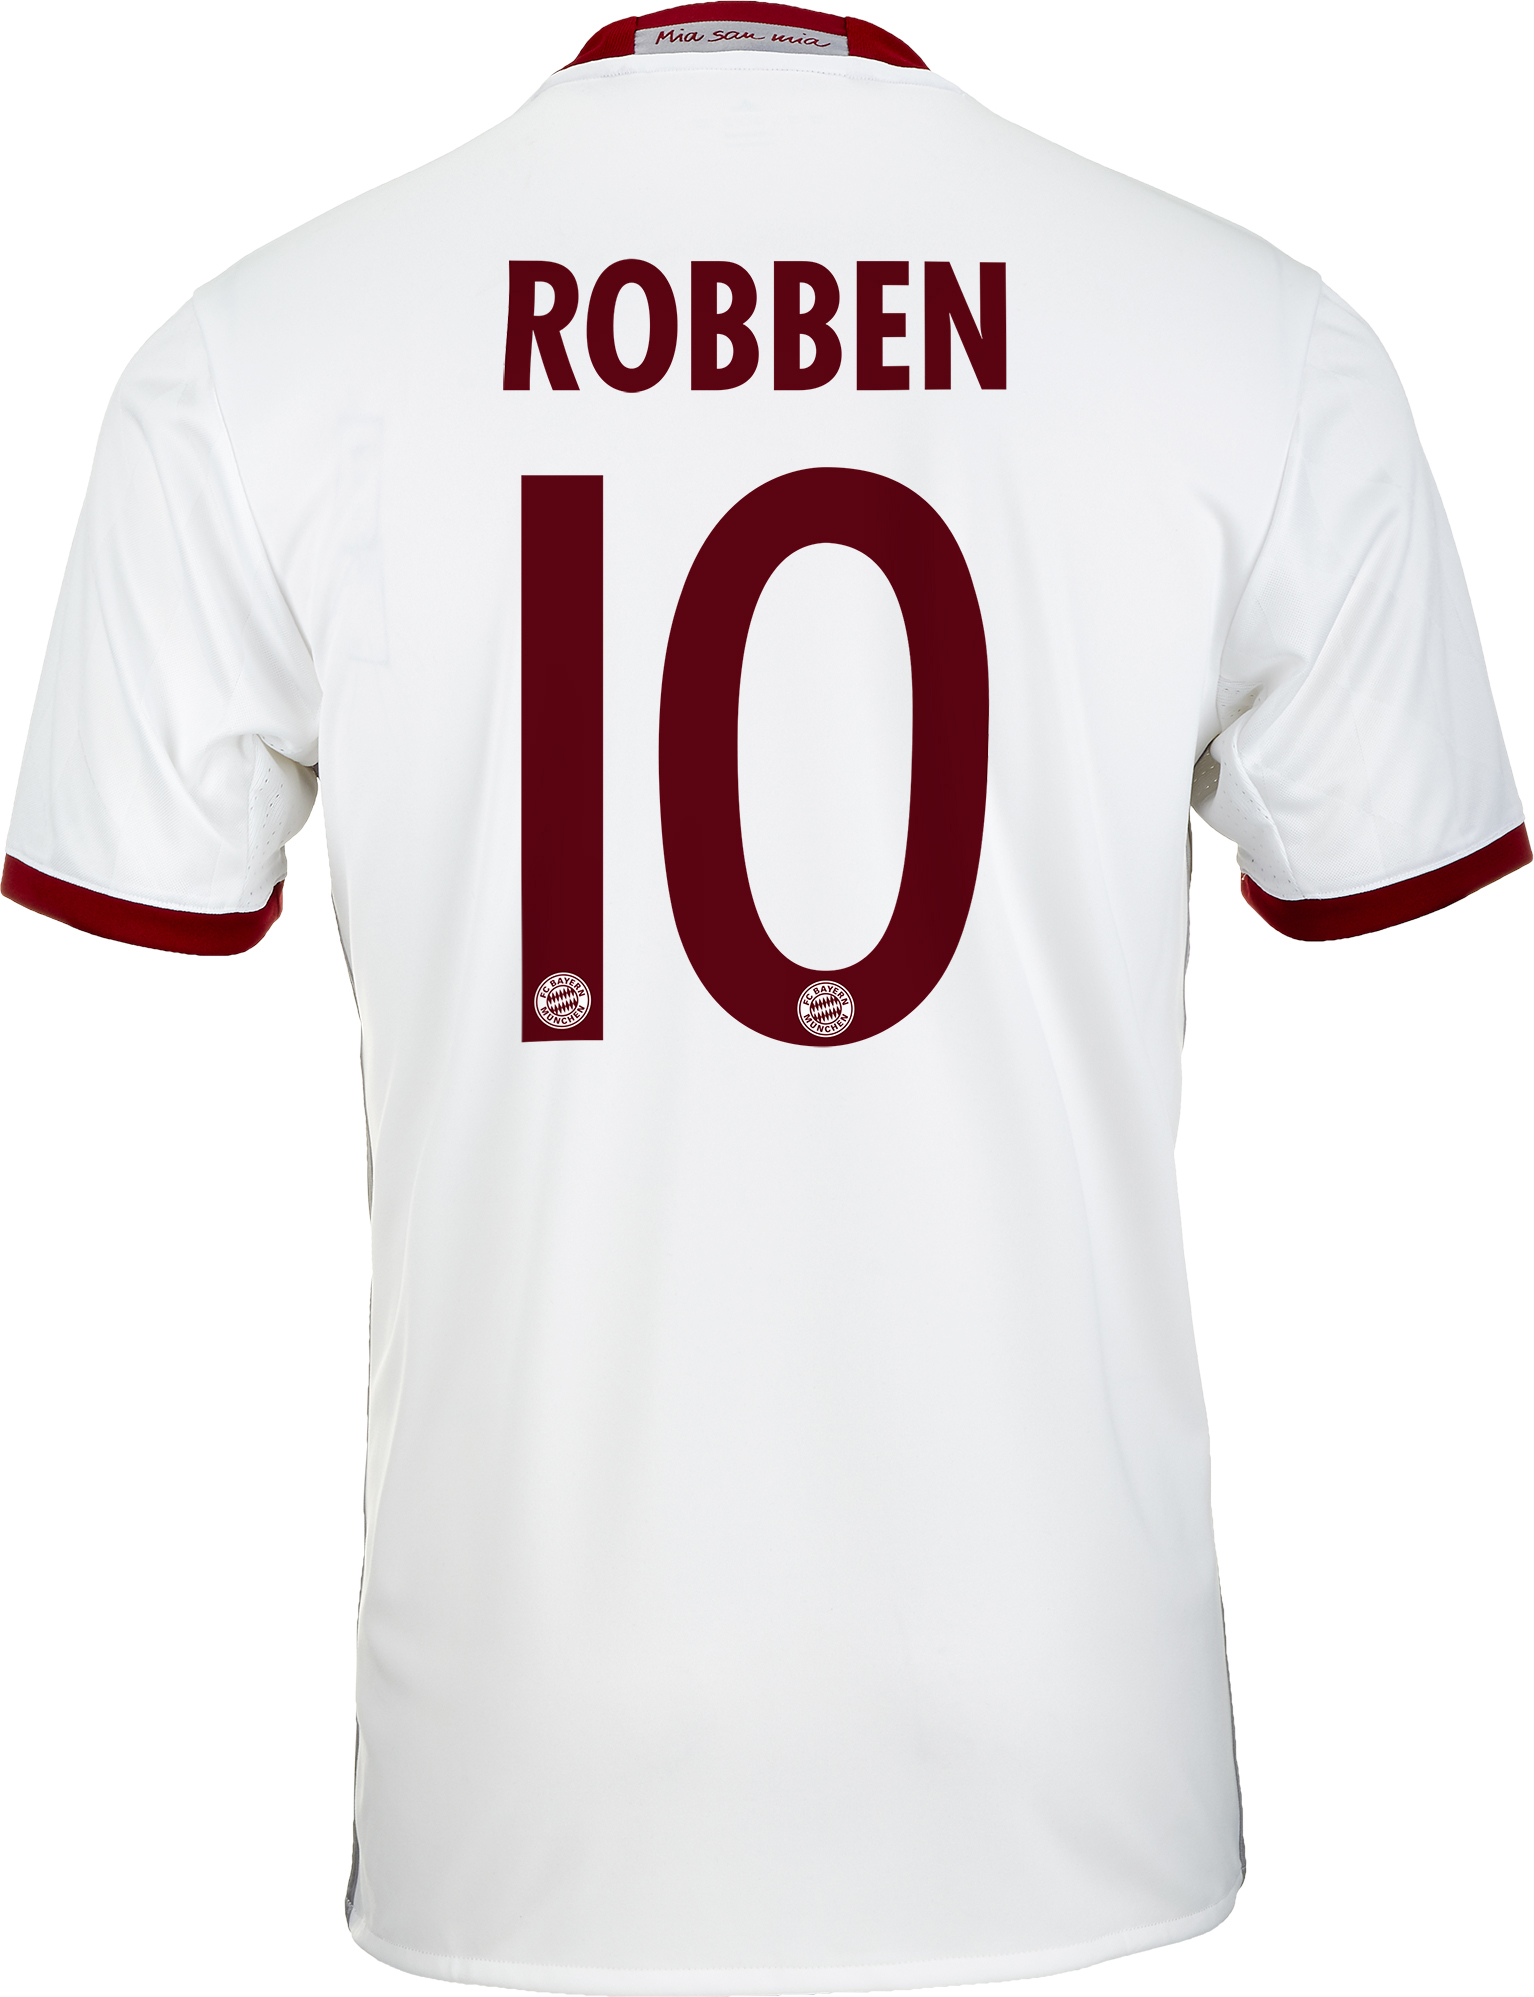 globaal aan de andere kant, wedstrijd adidas Kids Robben Bayern Munich Jersey - 2016 PSG Jerseys